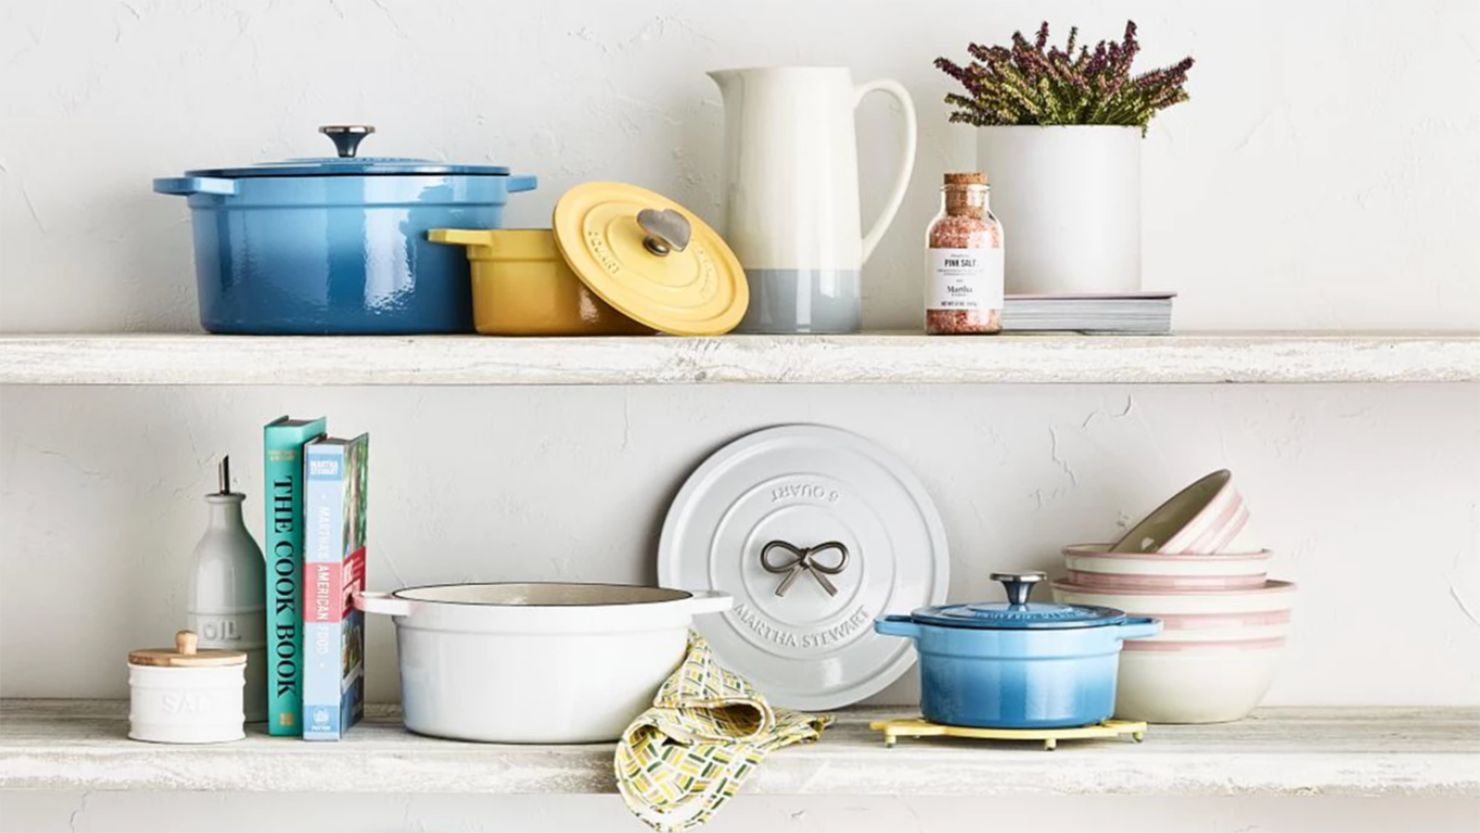 Martha Stewart debuts new premium cookware - Home Furnishings News